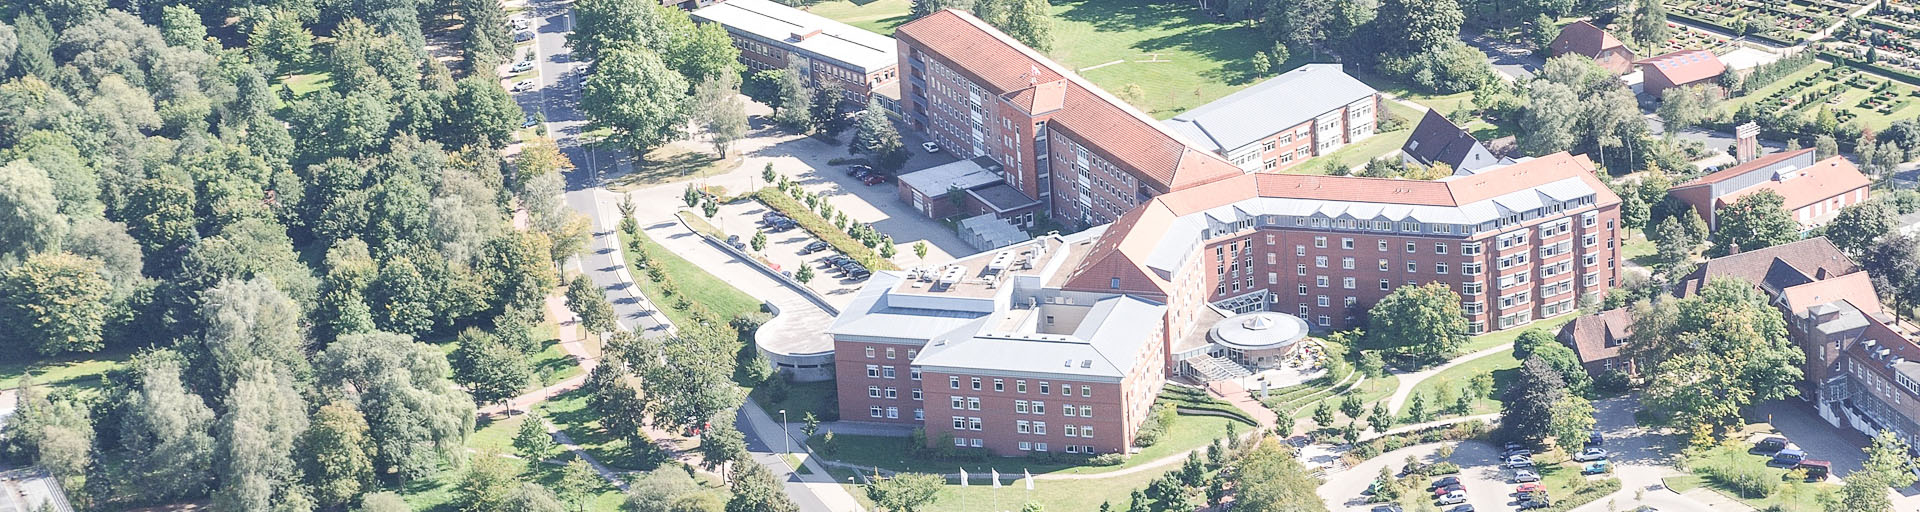 Luftaufnahme des Heidekreis-Klinikums